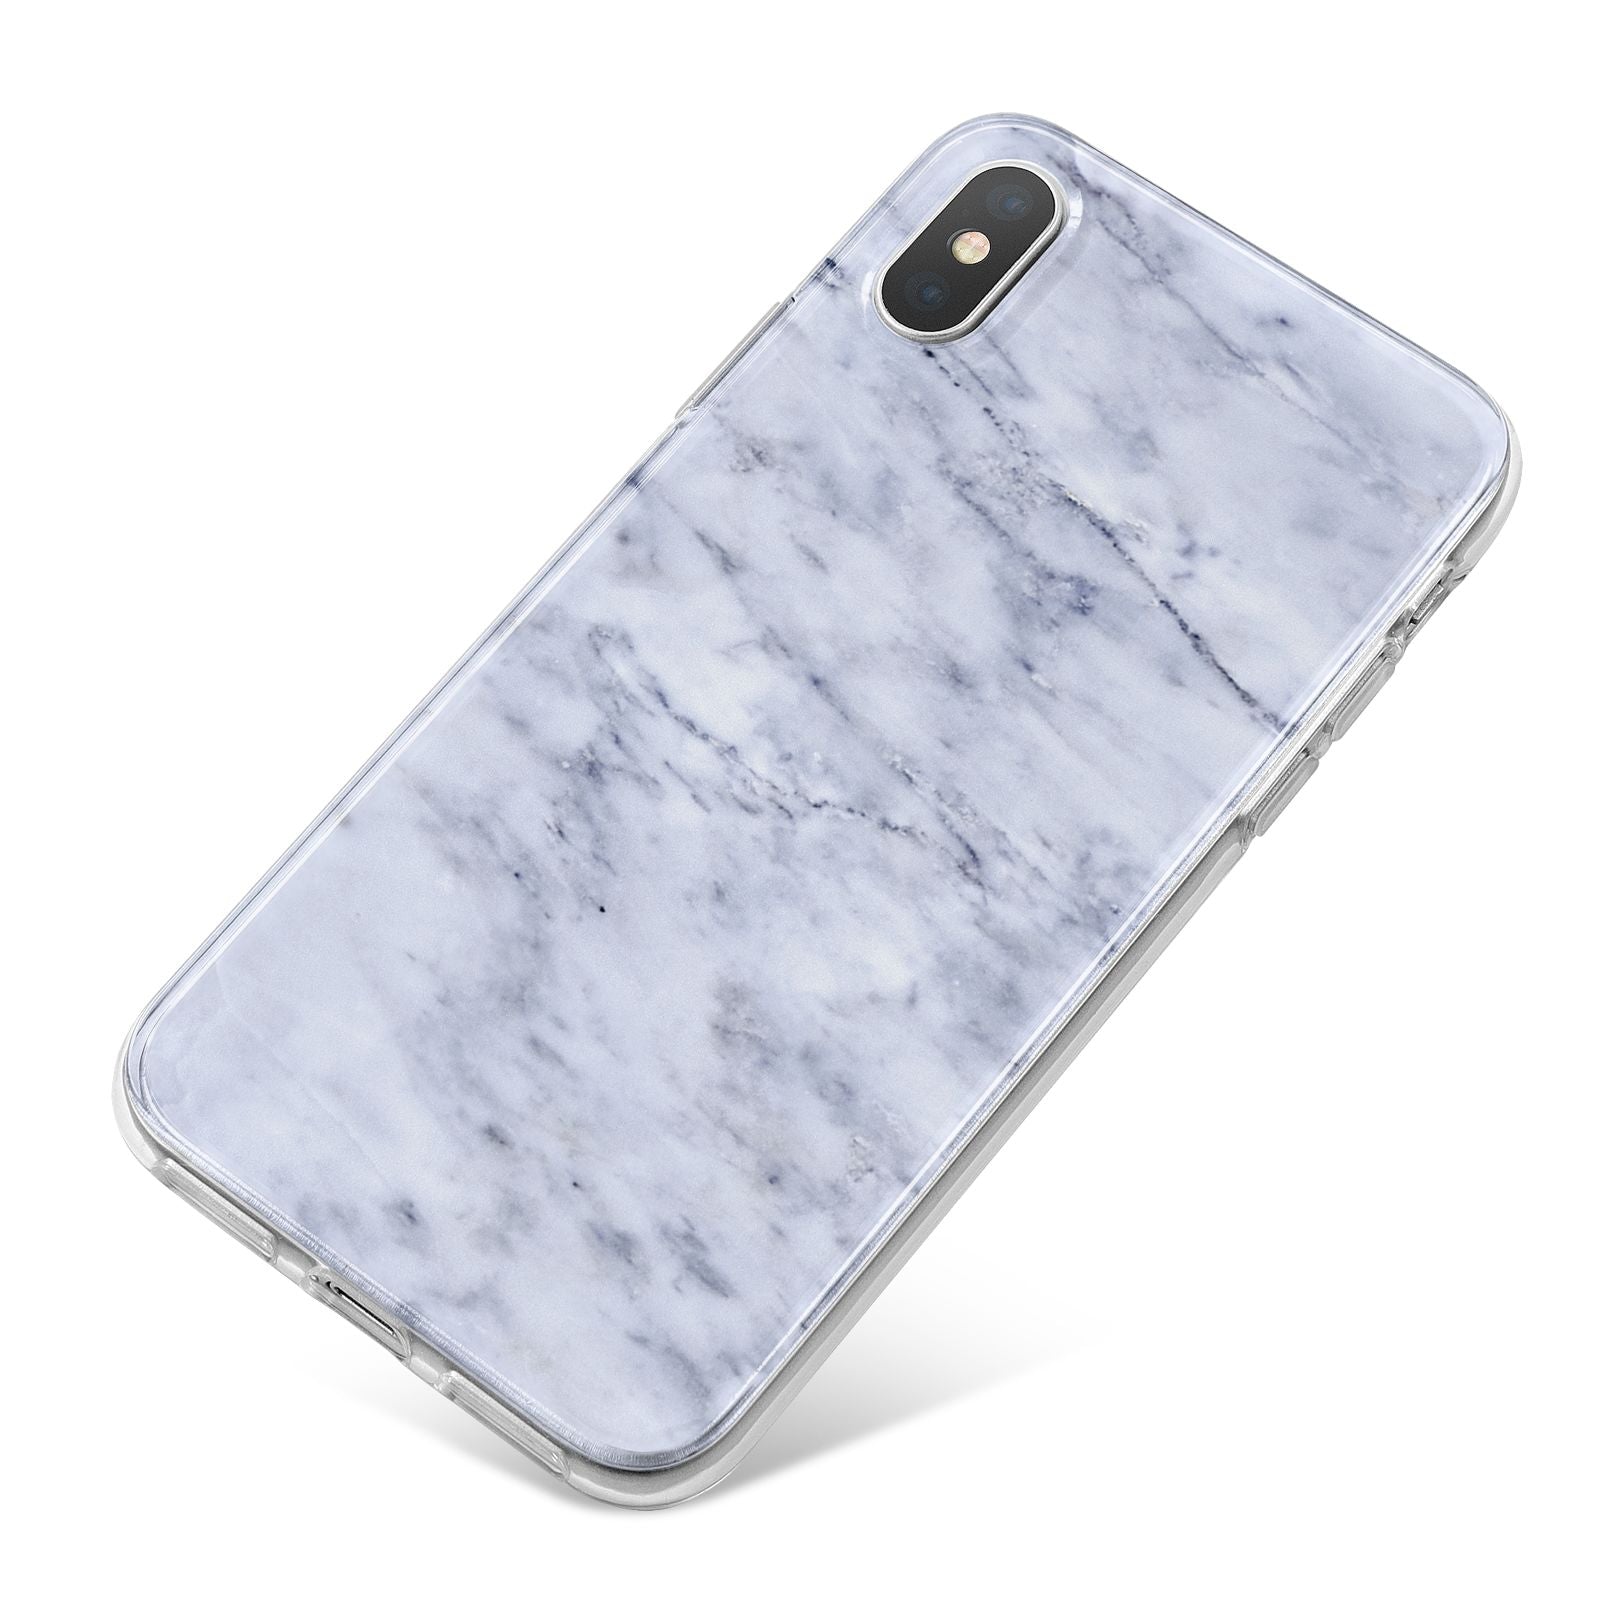 Faux Carrara Marble Print iPhone X Bumper Case on Silver iPhone